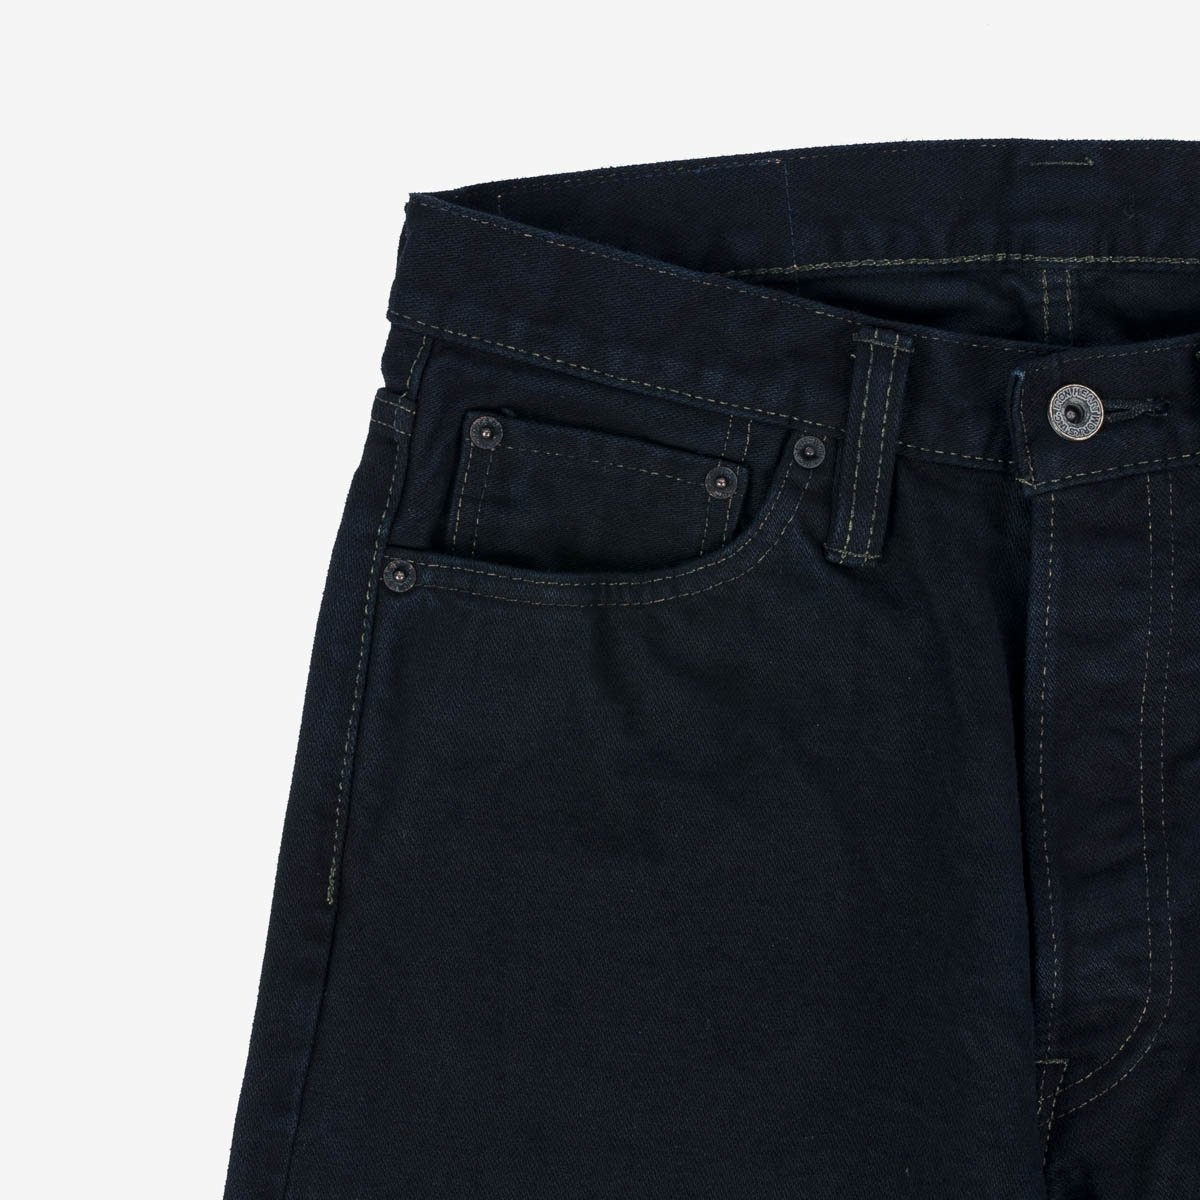 14oz Selvedge Denim Straight Cut Jeans - Indigo/Black